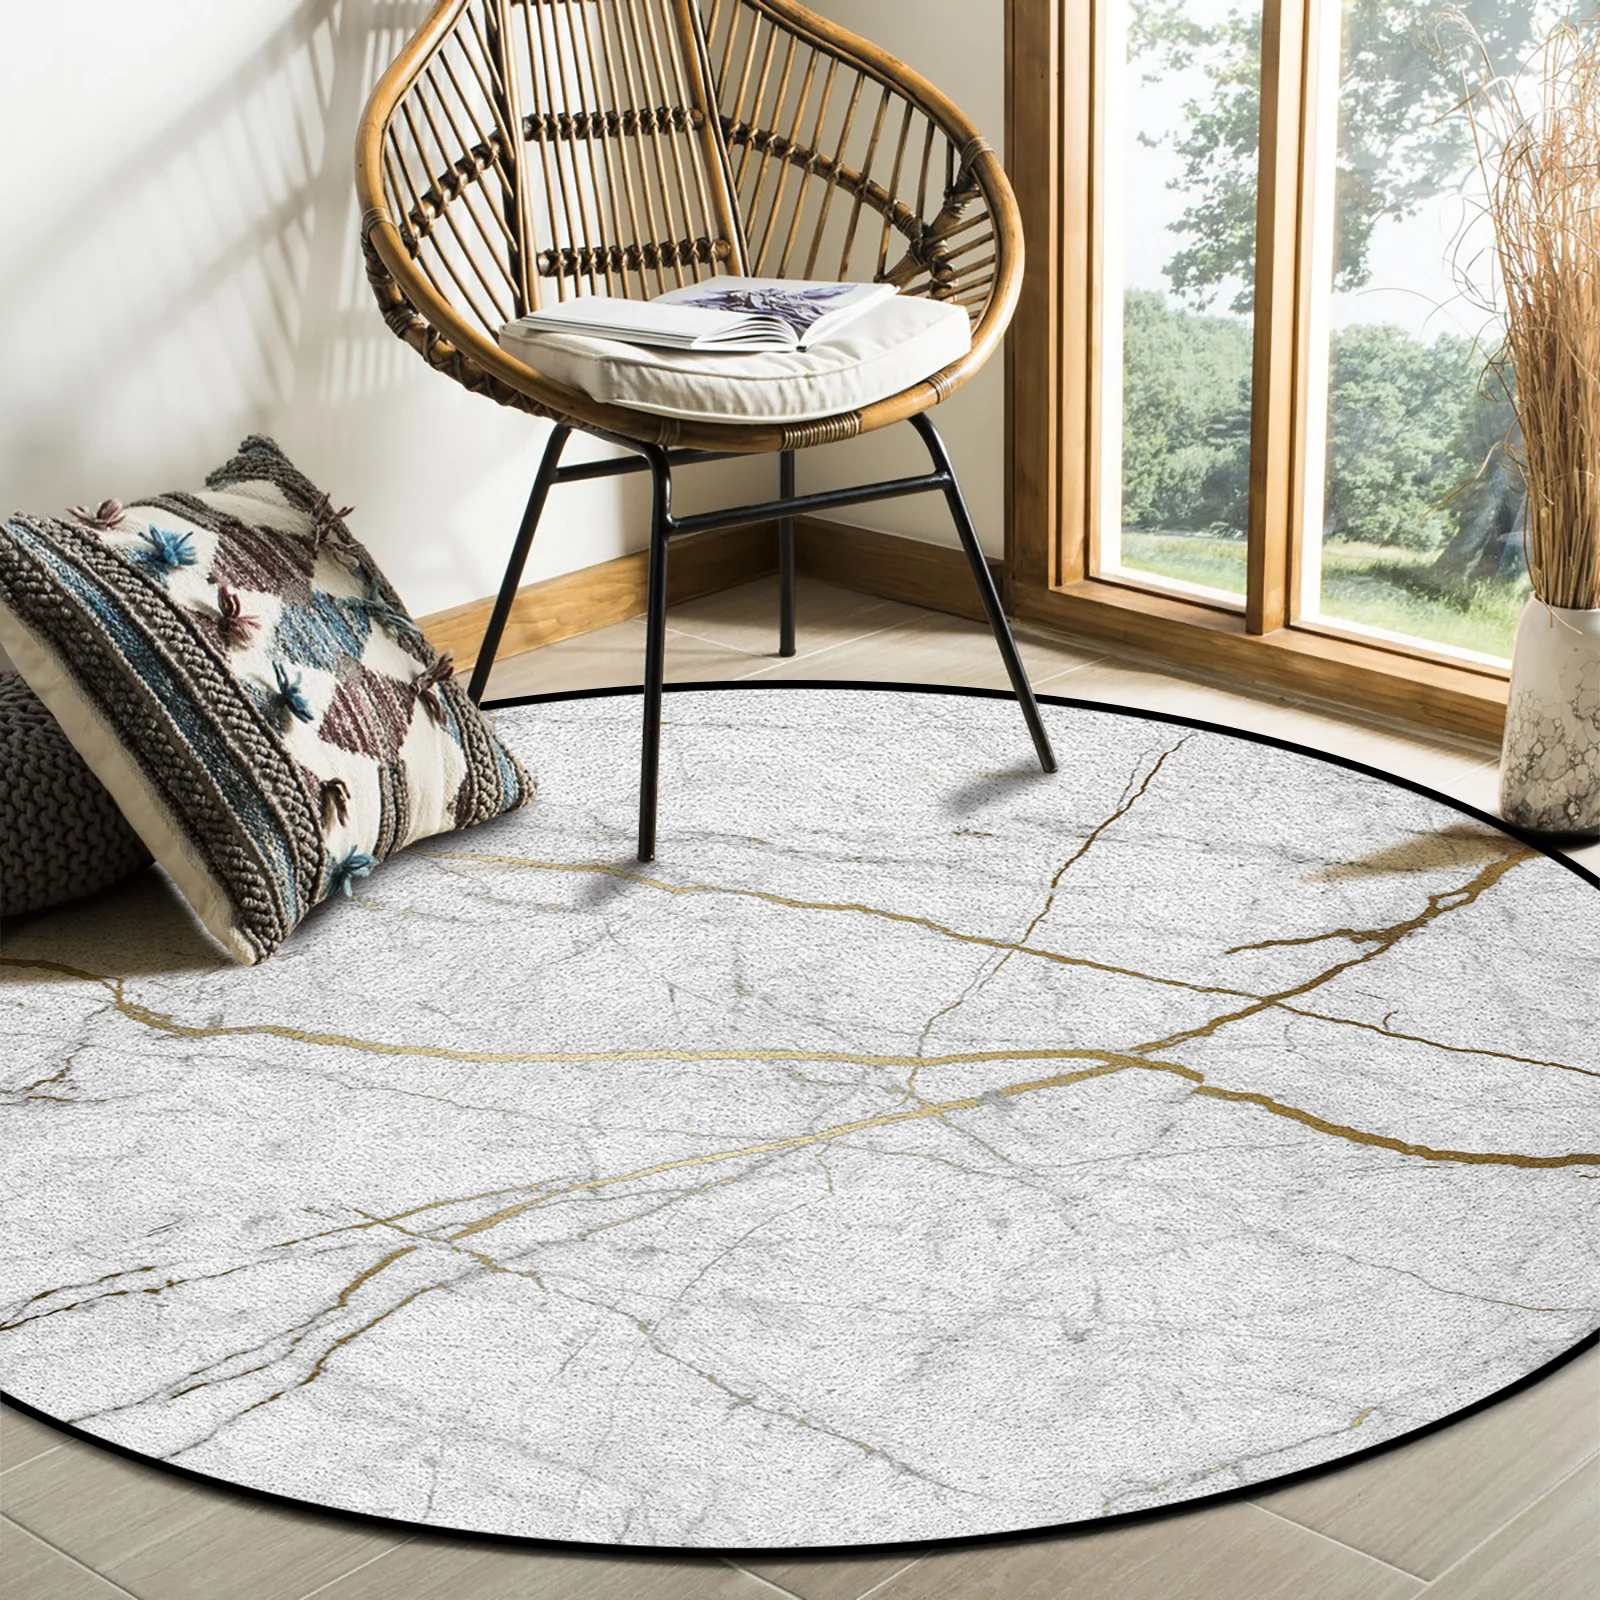 Oligomeric Marble Texture Home Decor Area Rugs Round Kids Carpet Room Floor Mat 